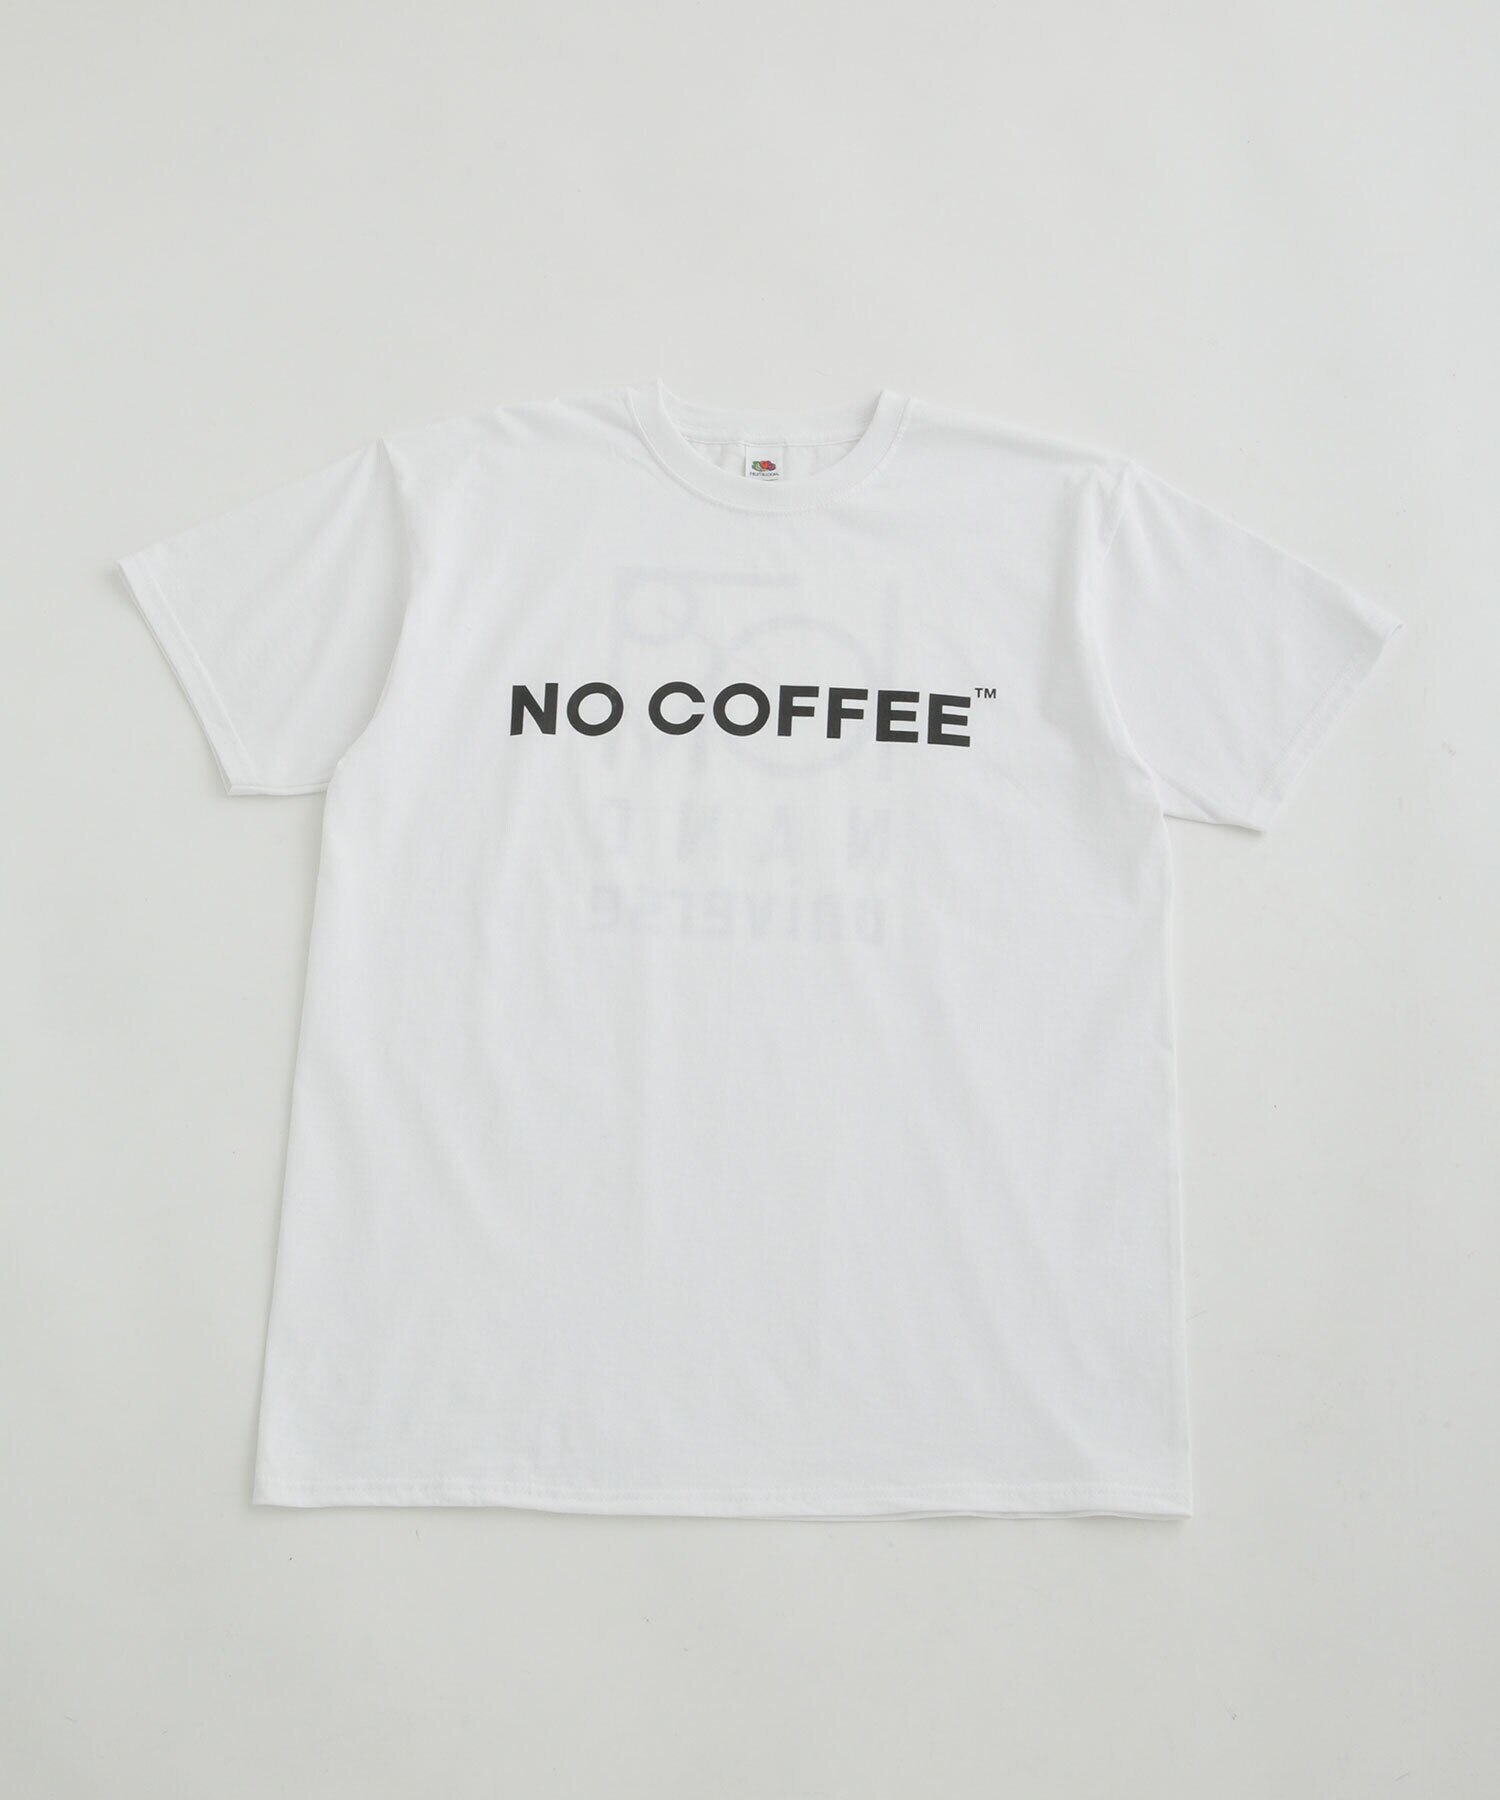 NO COFFEE × SEVESKIG ロンT 黒 L